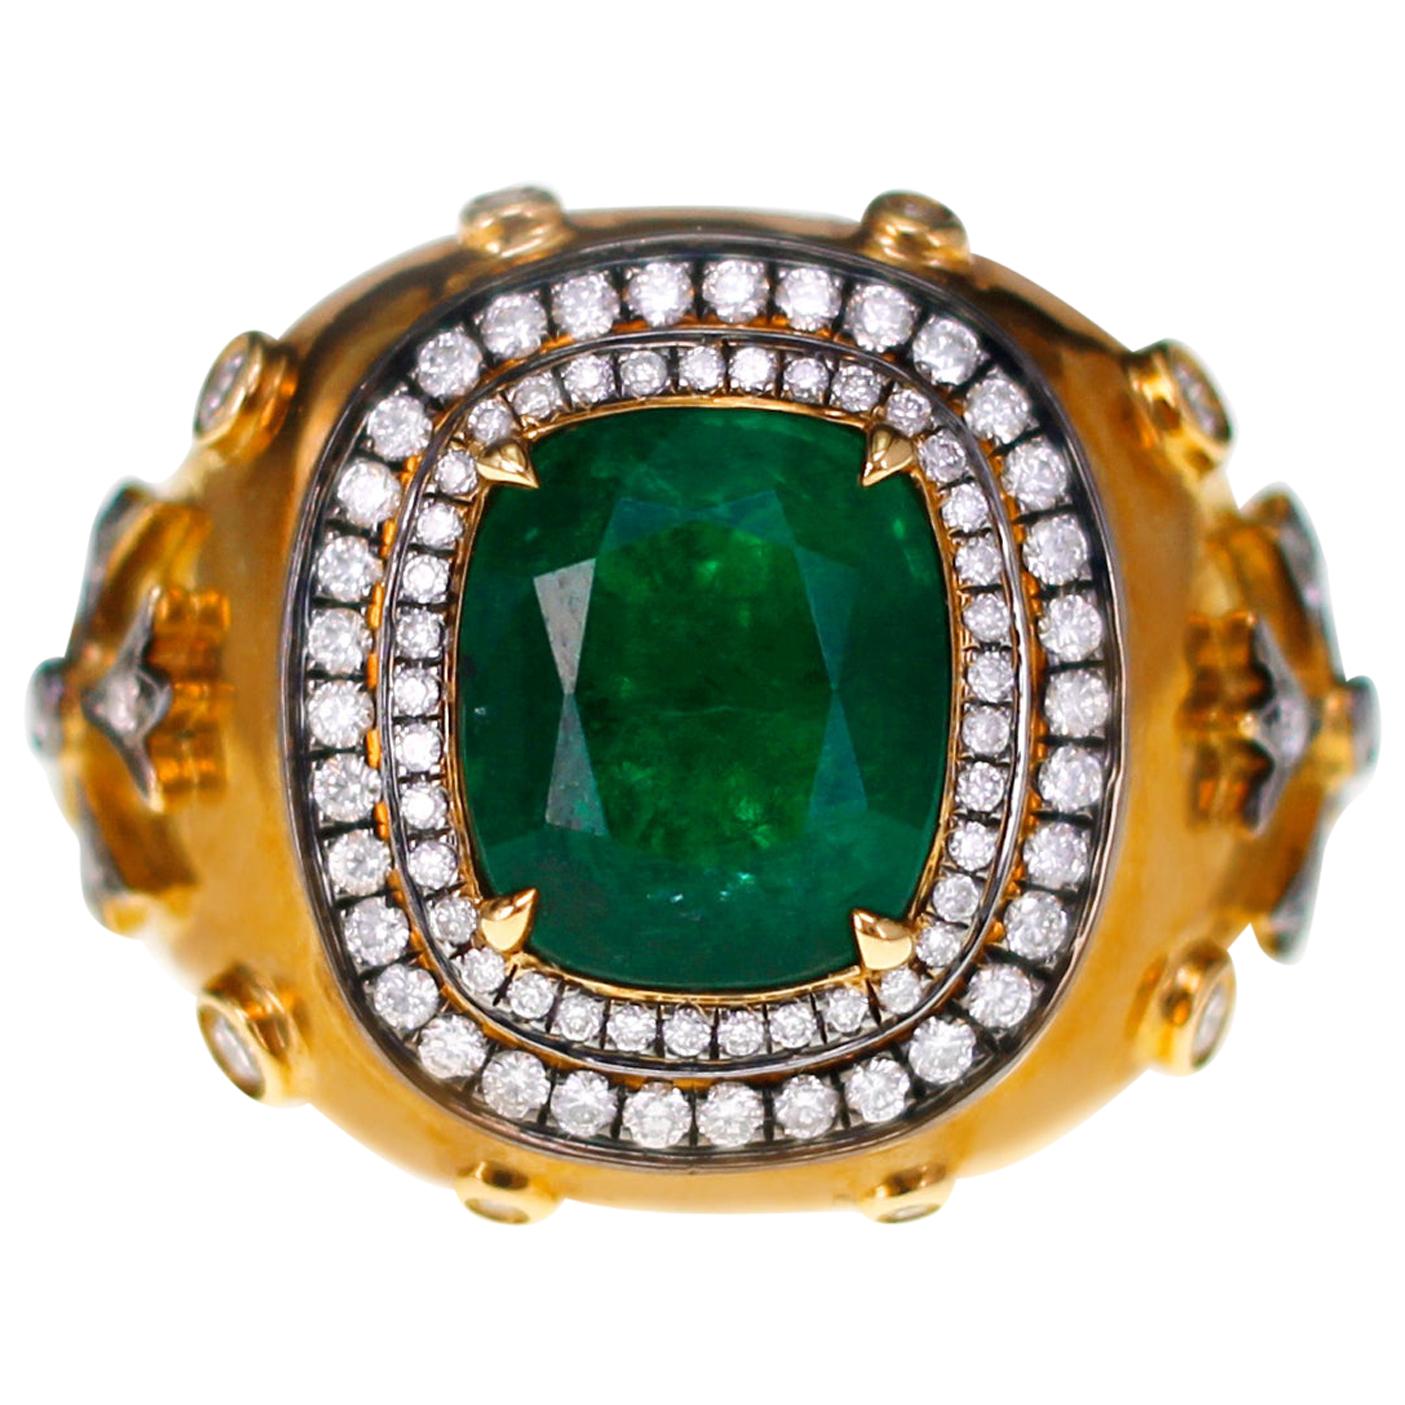 3.19 Carat Vivid Green Zambian Emerald in Antique Style Bridal Ring